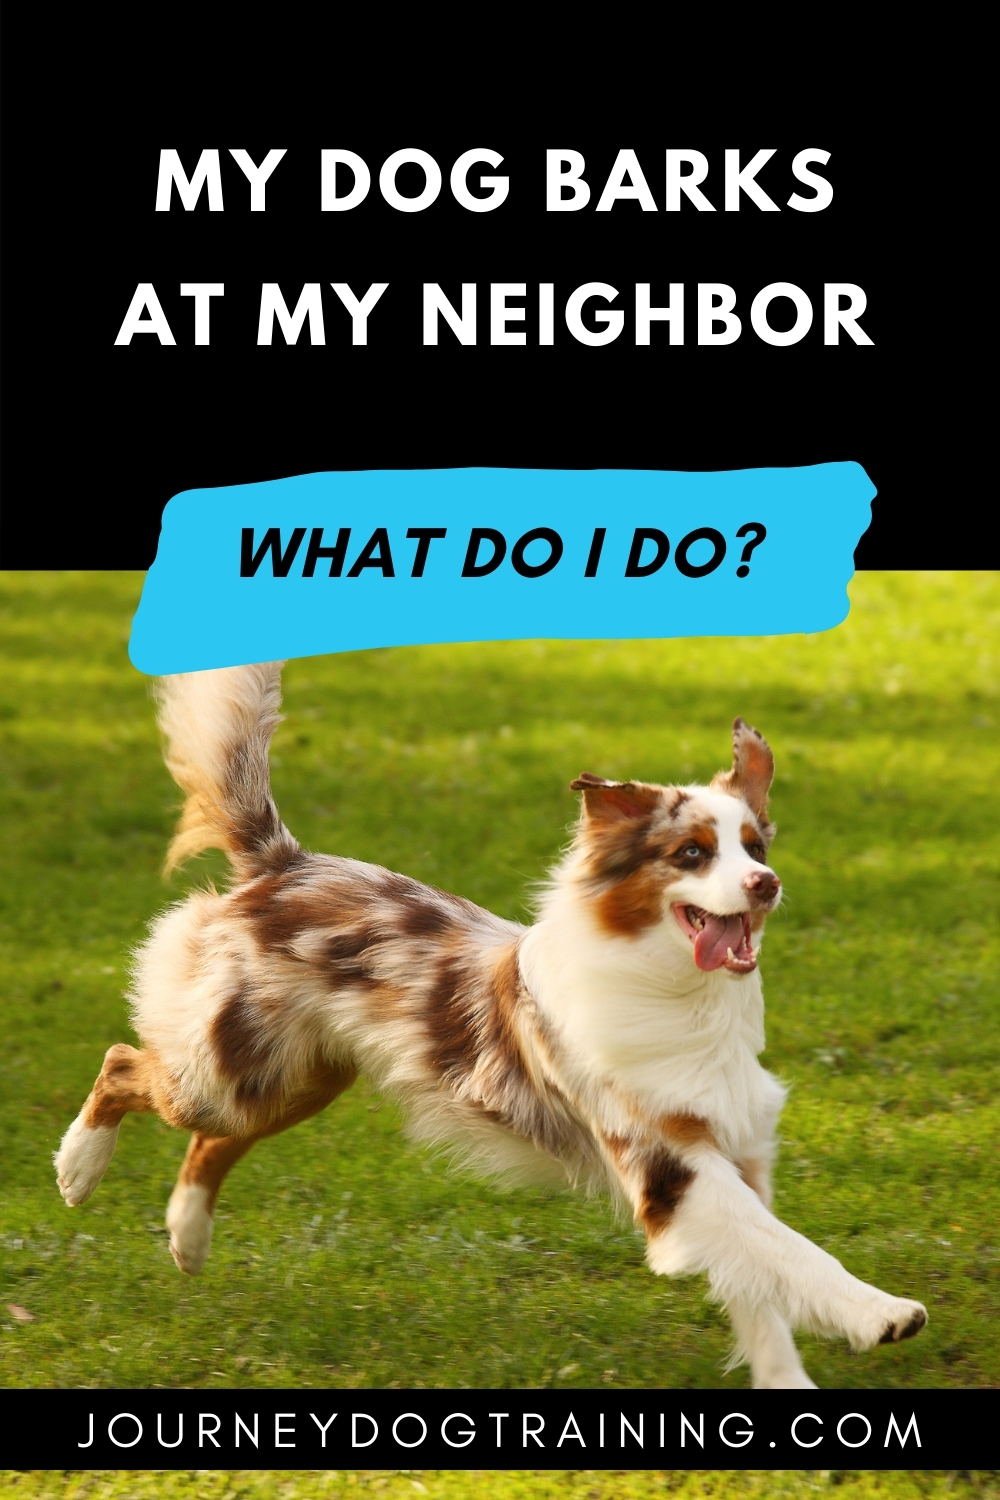 How Do I Stop My Dog From Barking at My Neighbor? | journeydogtraining.com